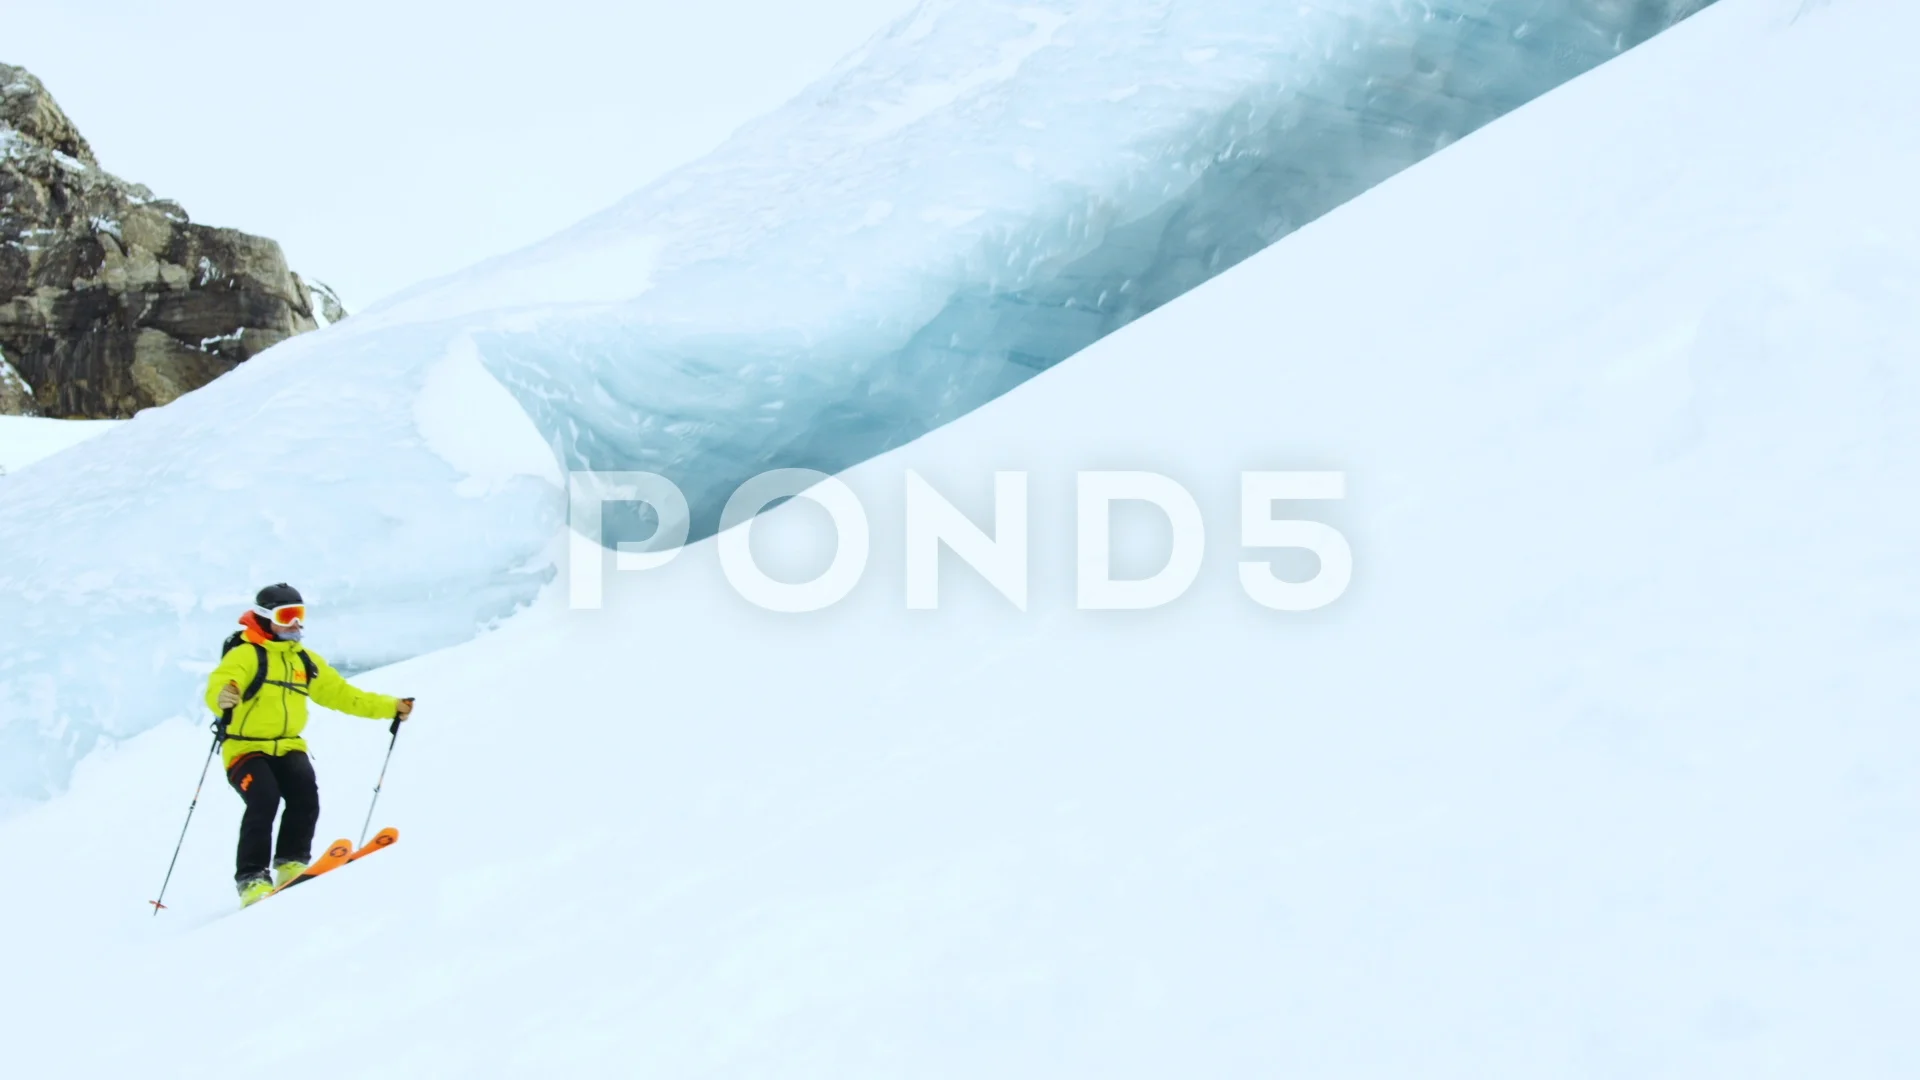 https://images.pond5.com/elite-skier-sliding-down-snowy-129083015_prevstill.jpeg